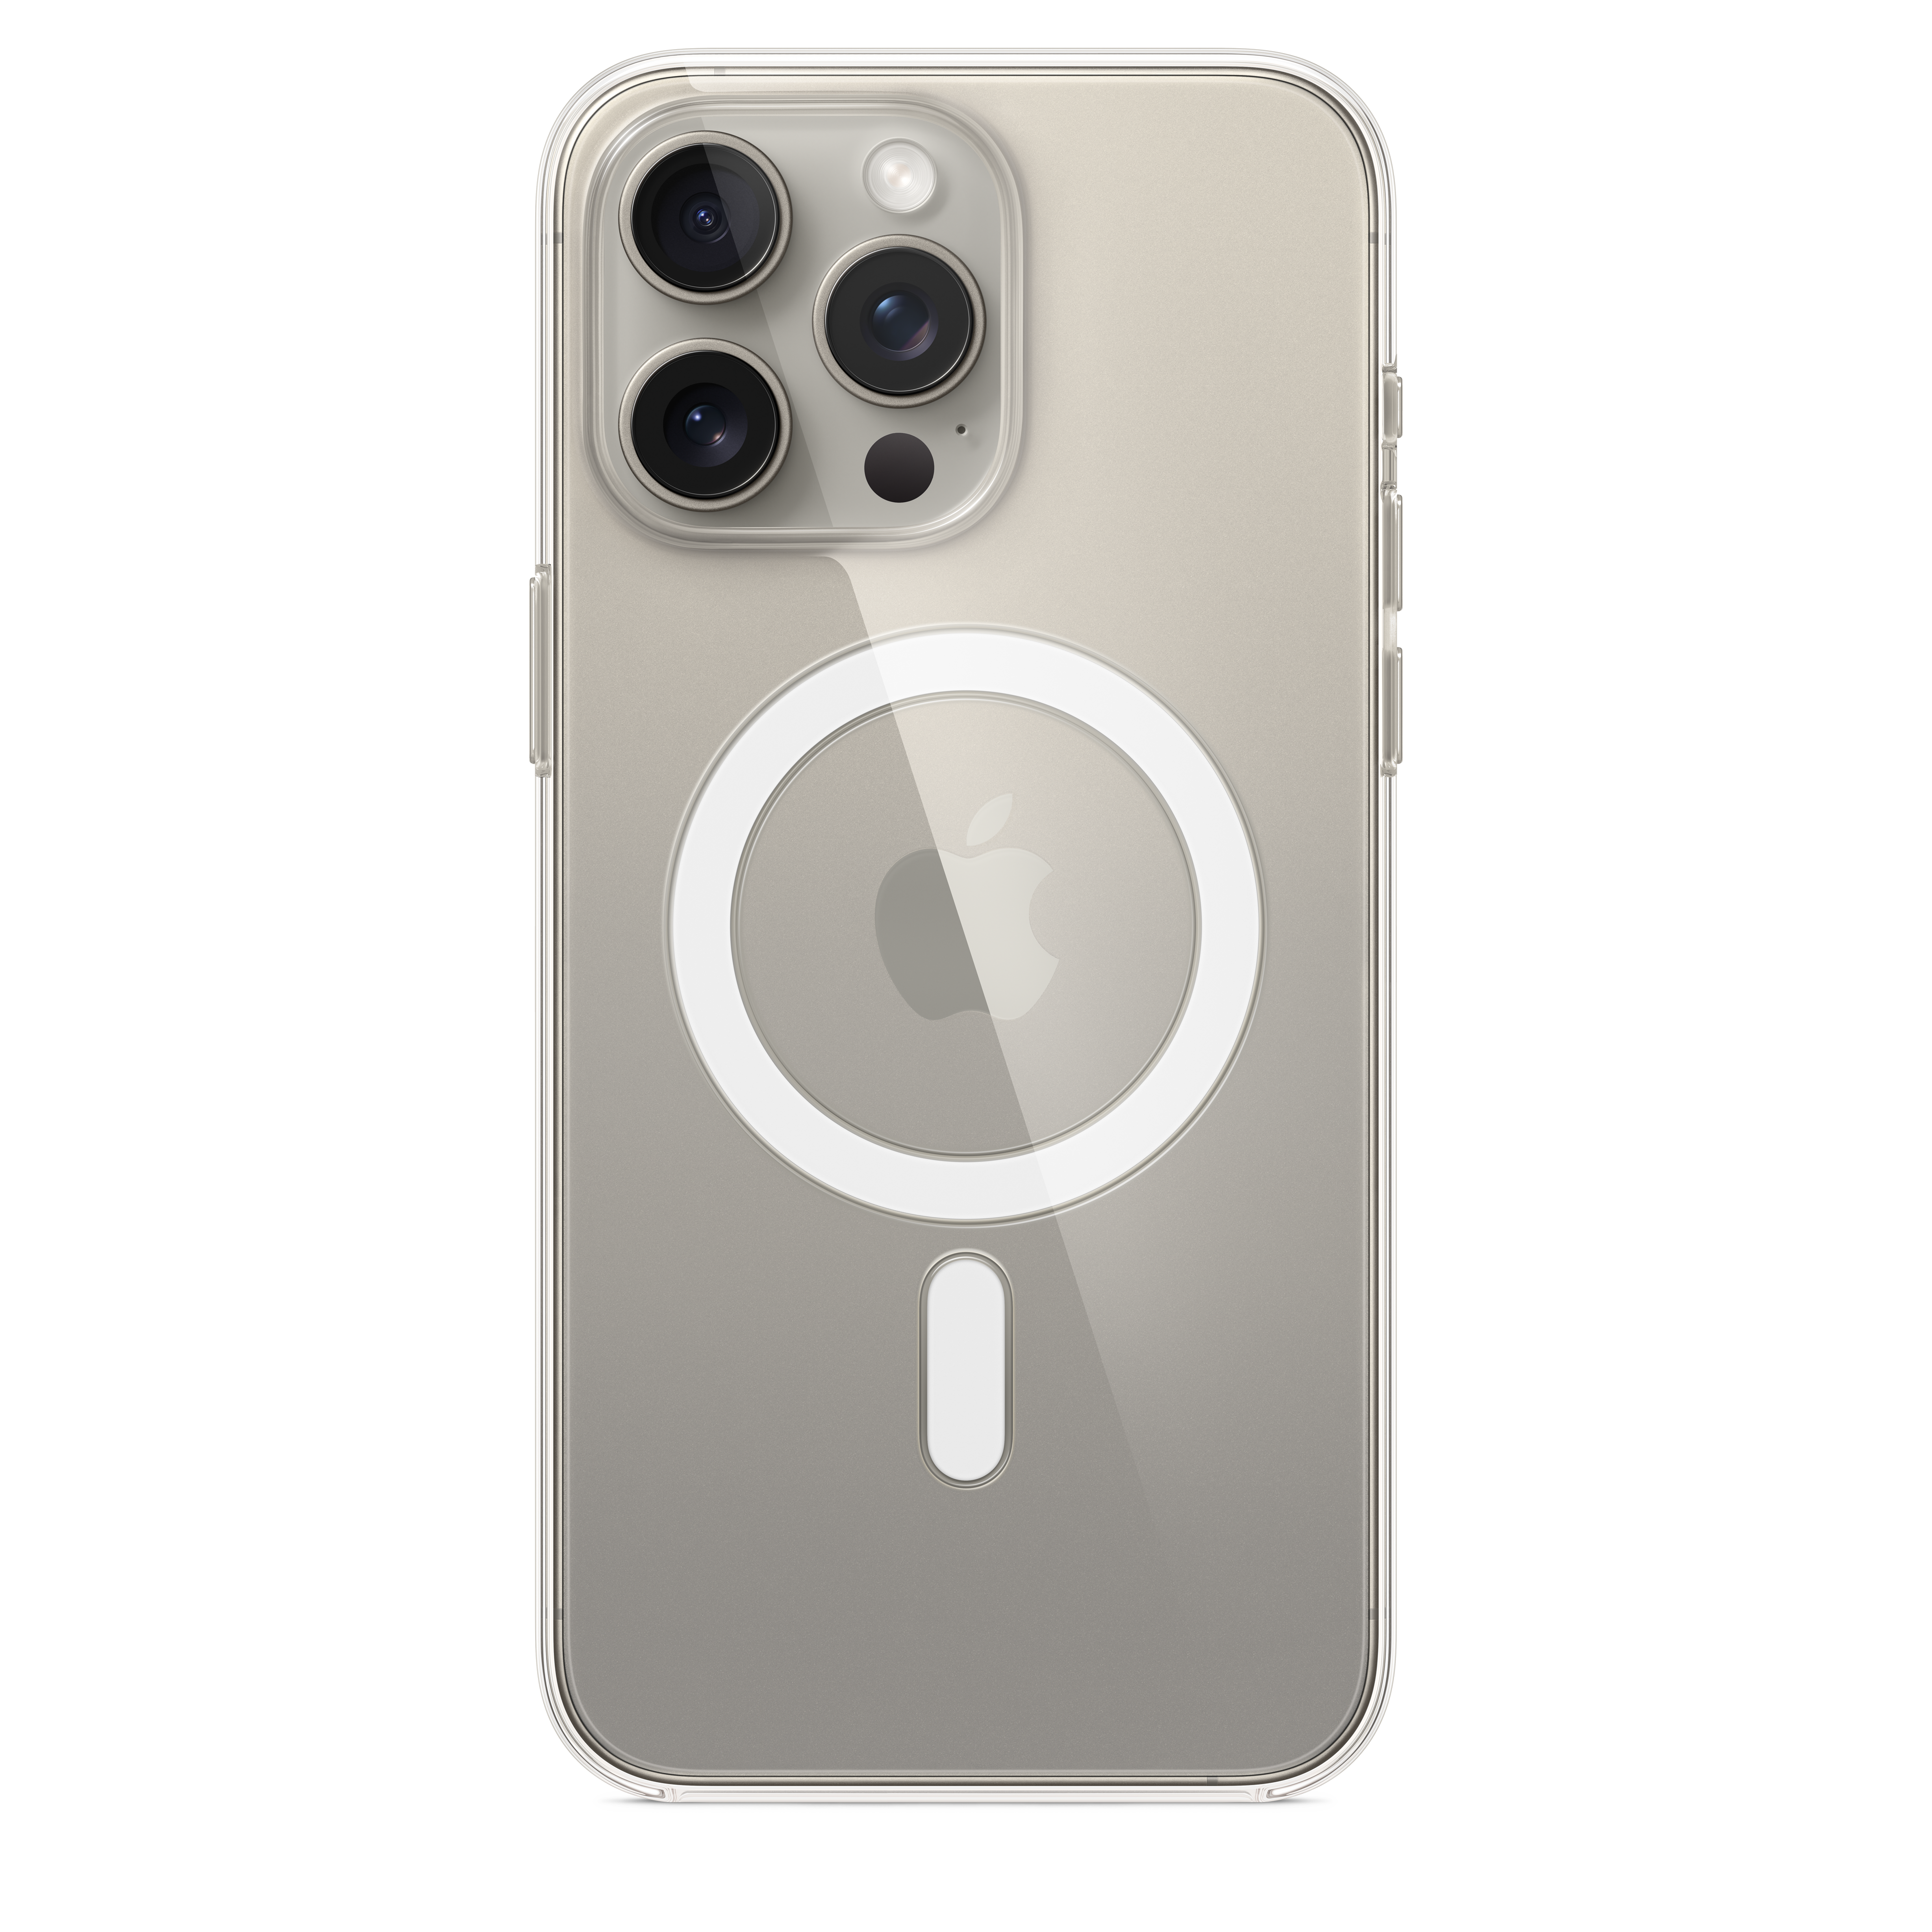 Vidrio Ecologico Qdos OptiGuard Para iPhone 15 Pro Max - Transparente – Mac  Center Colombia